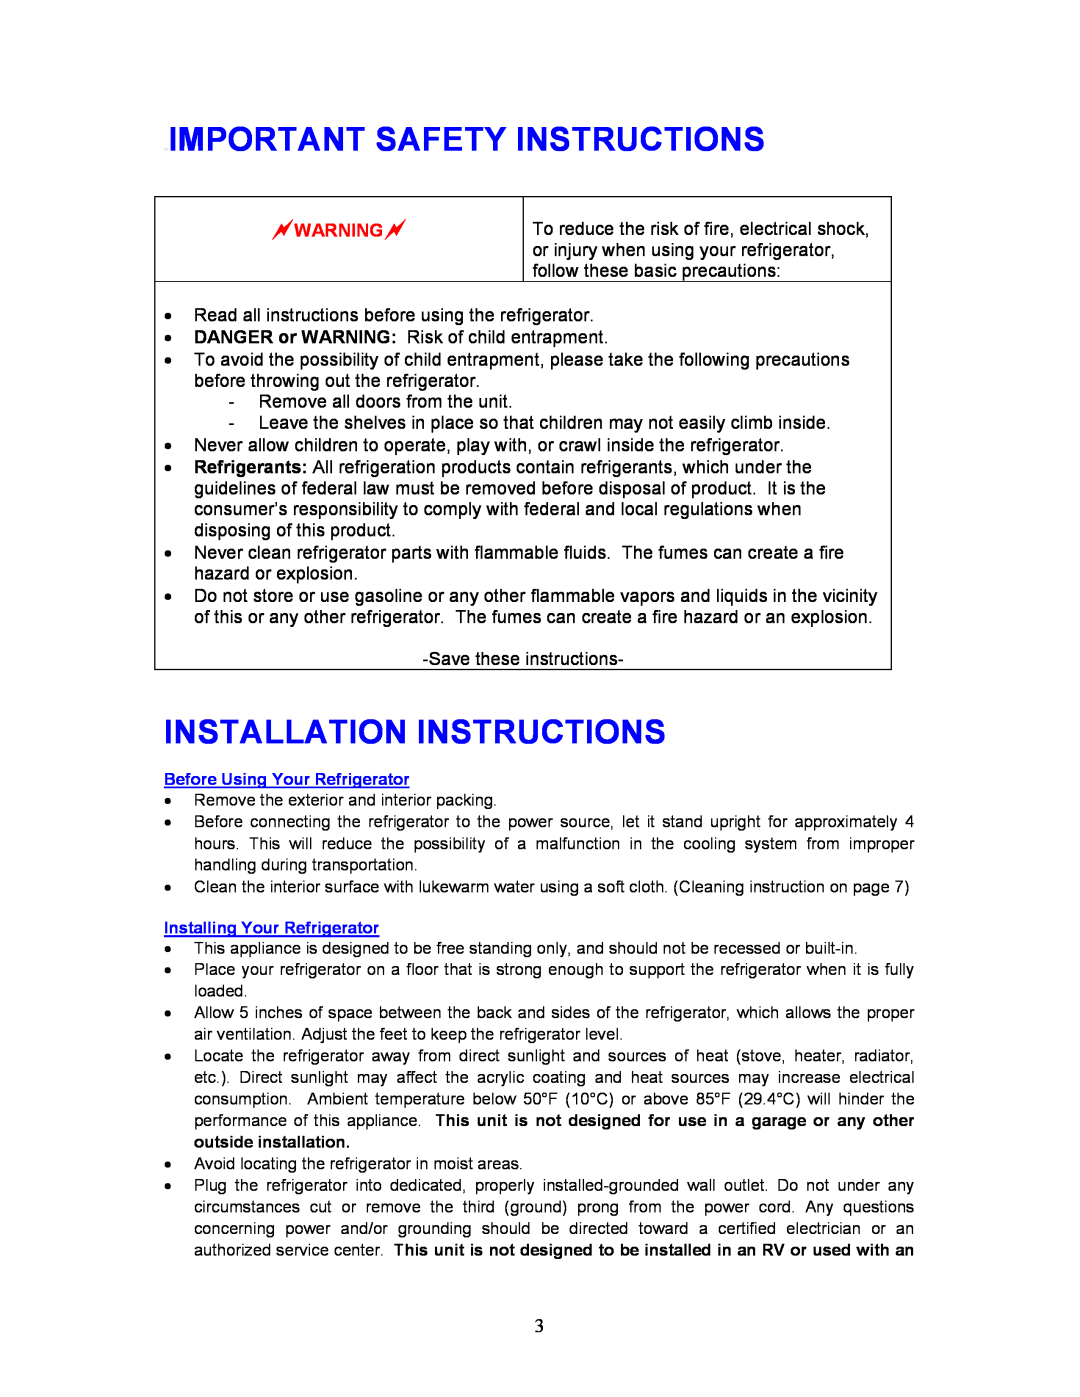 Magic Chef MCBR170B instruction manual Important Safety Instructions, Installation Instructions 